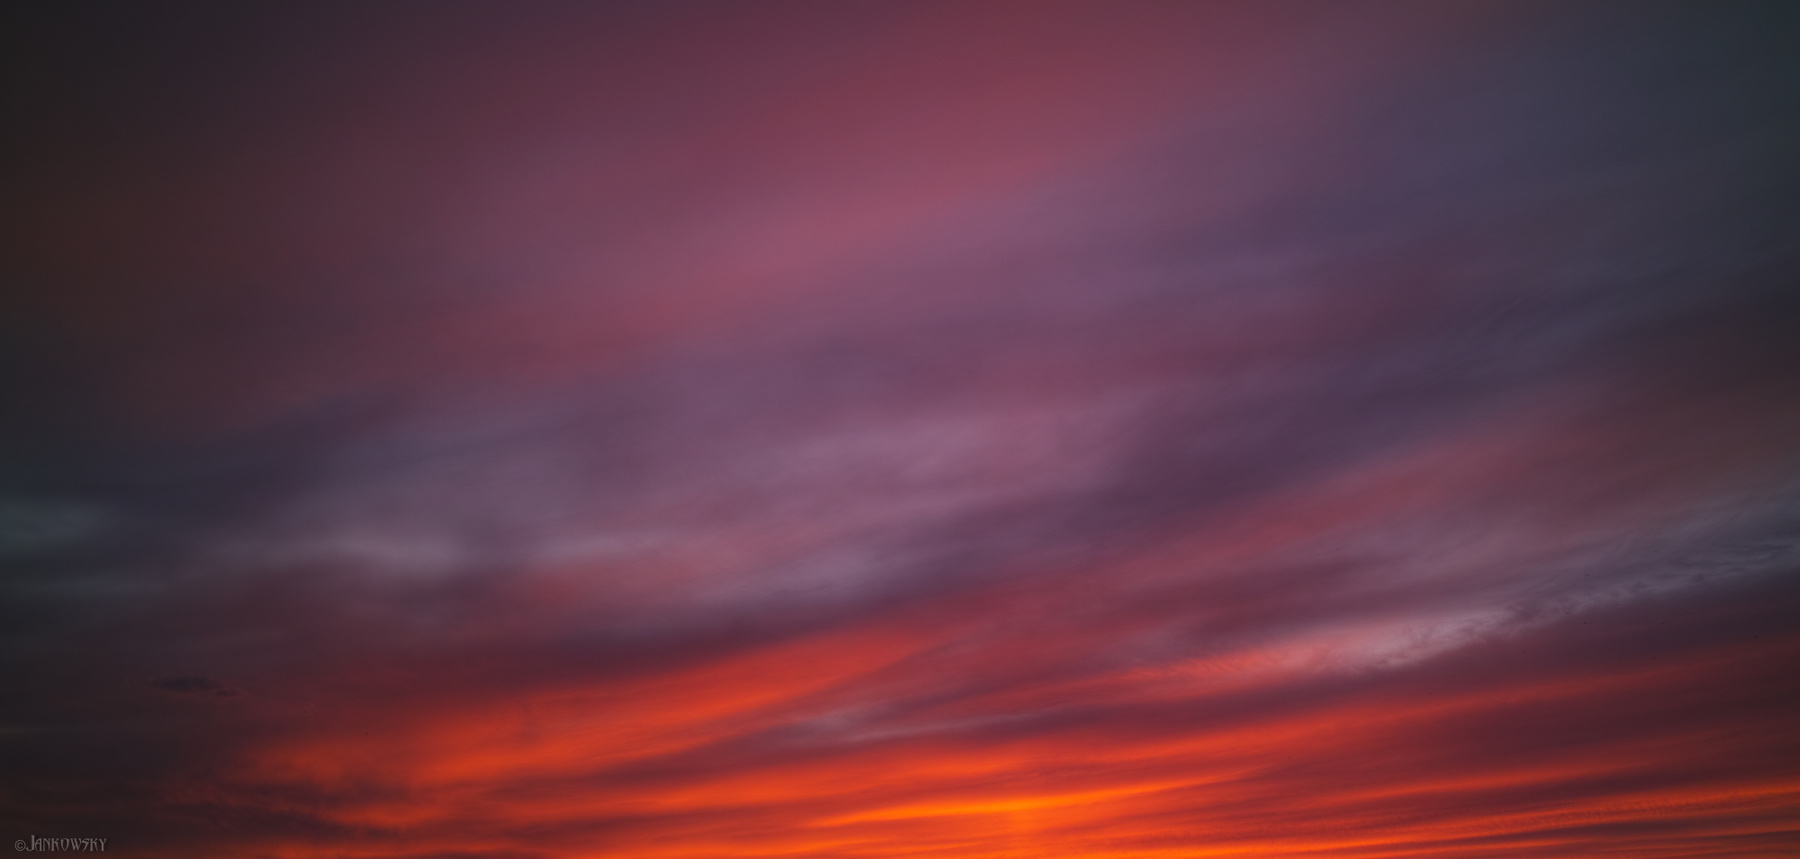 Foveon-безумие омского неба 10.06.21 Sigma SD1 Merrill Foveon панорама облака градиент